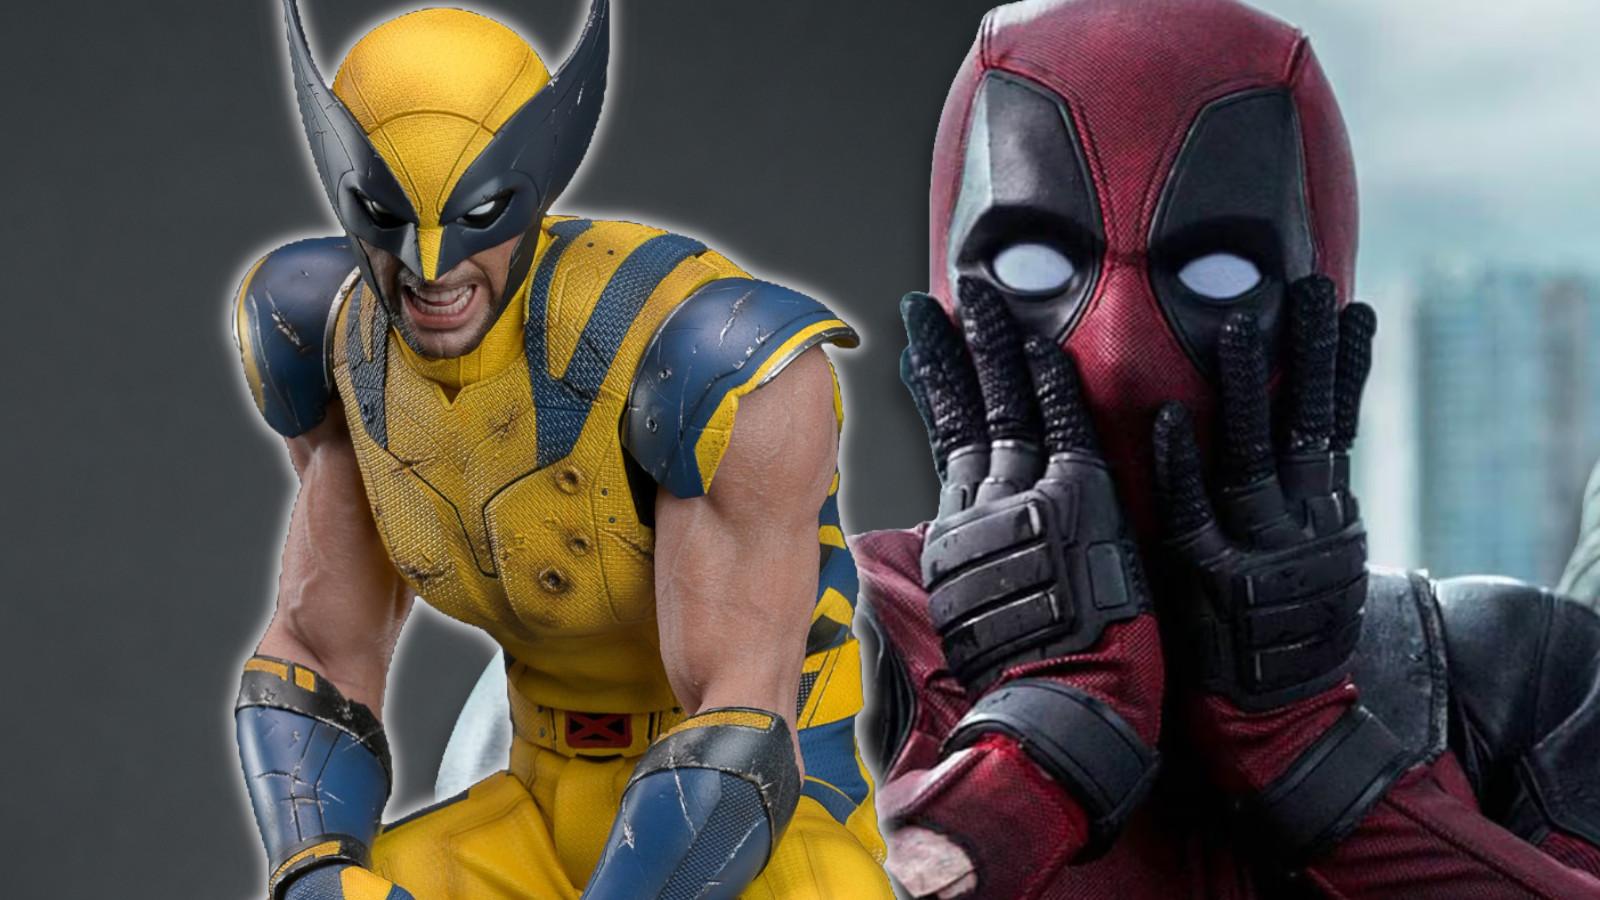 Hot Toys Wolverine figure & Deadpool